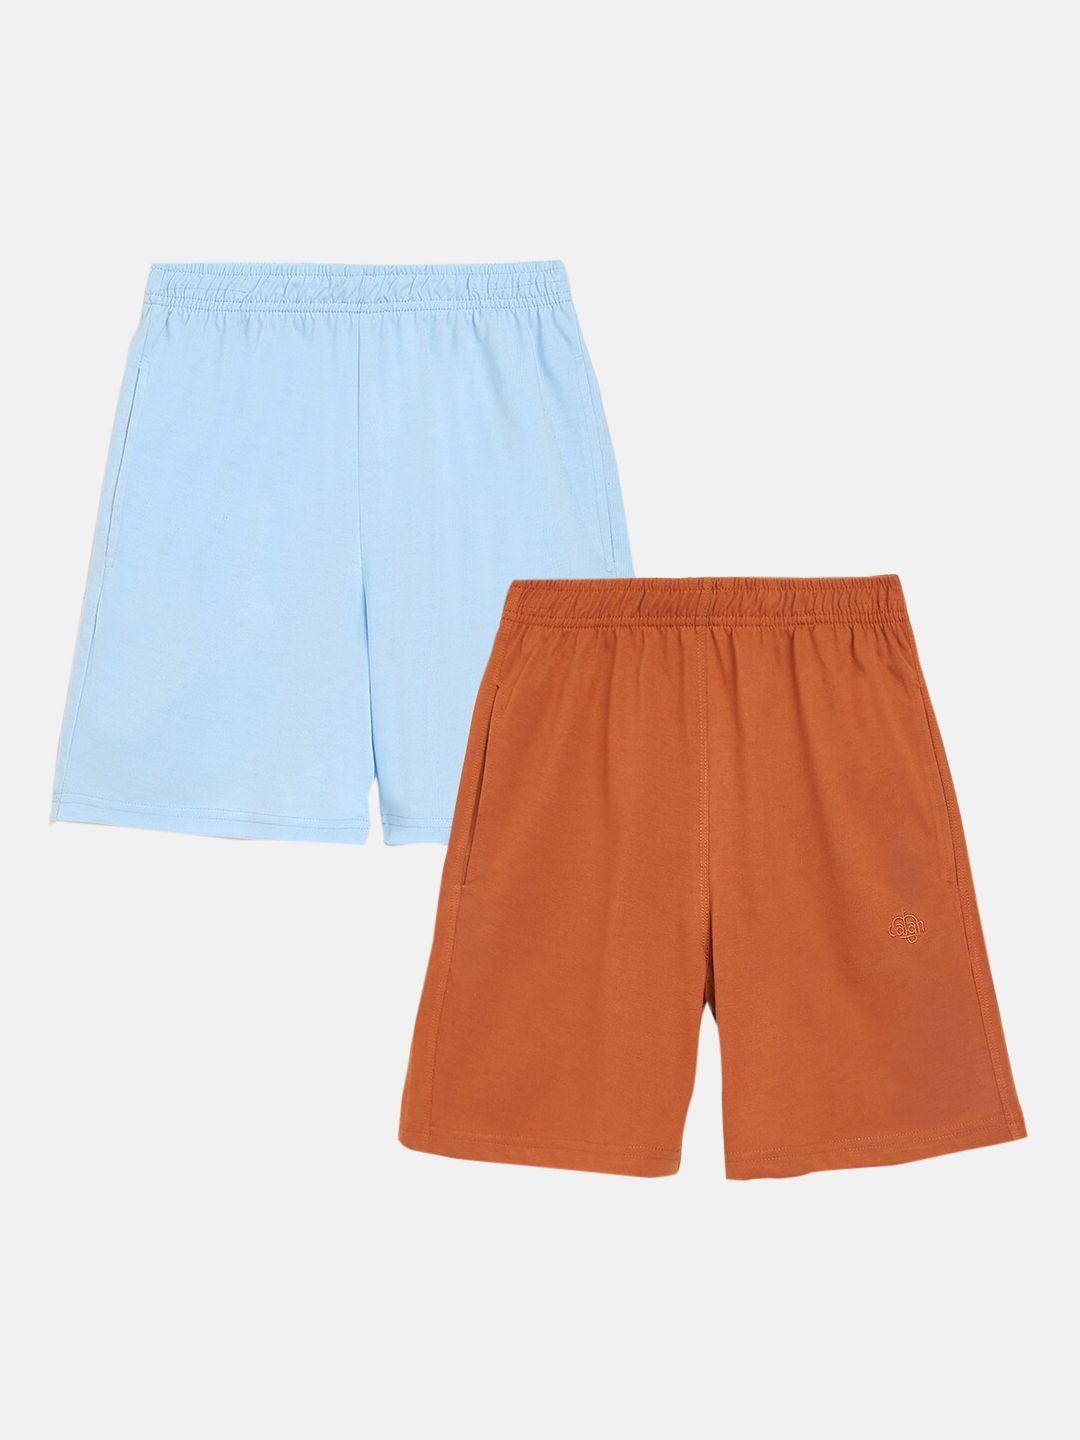 chimprala boys set of 2 turquoise blue & brown cotton sports shorts